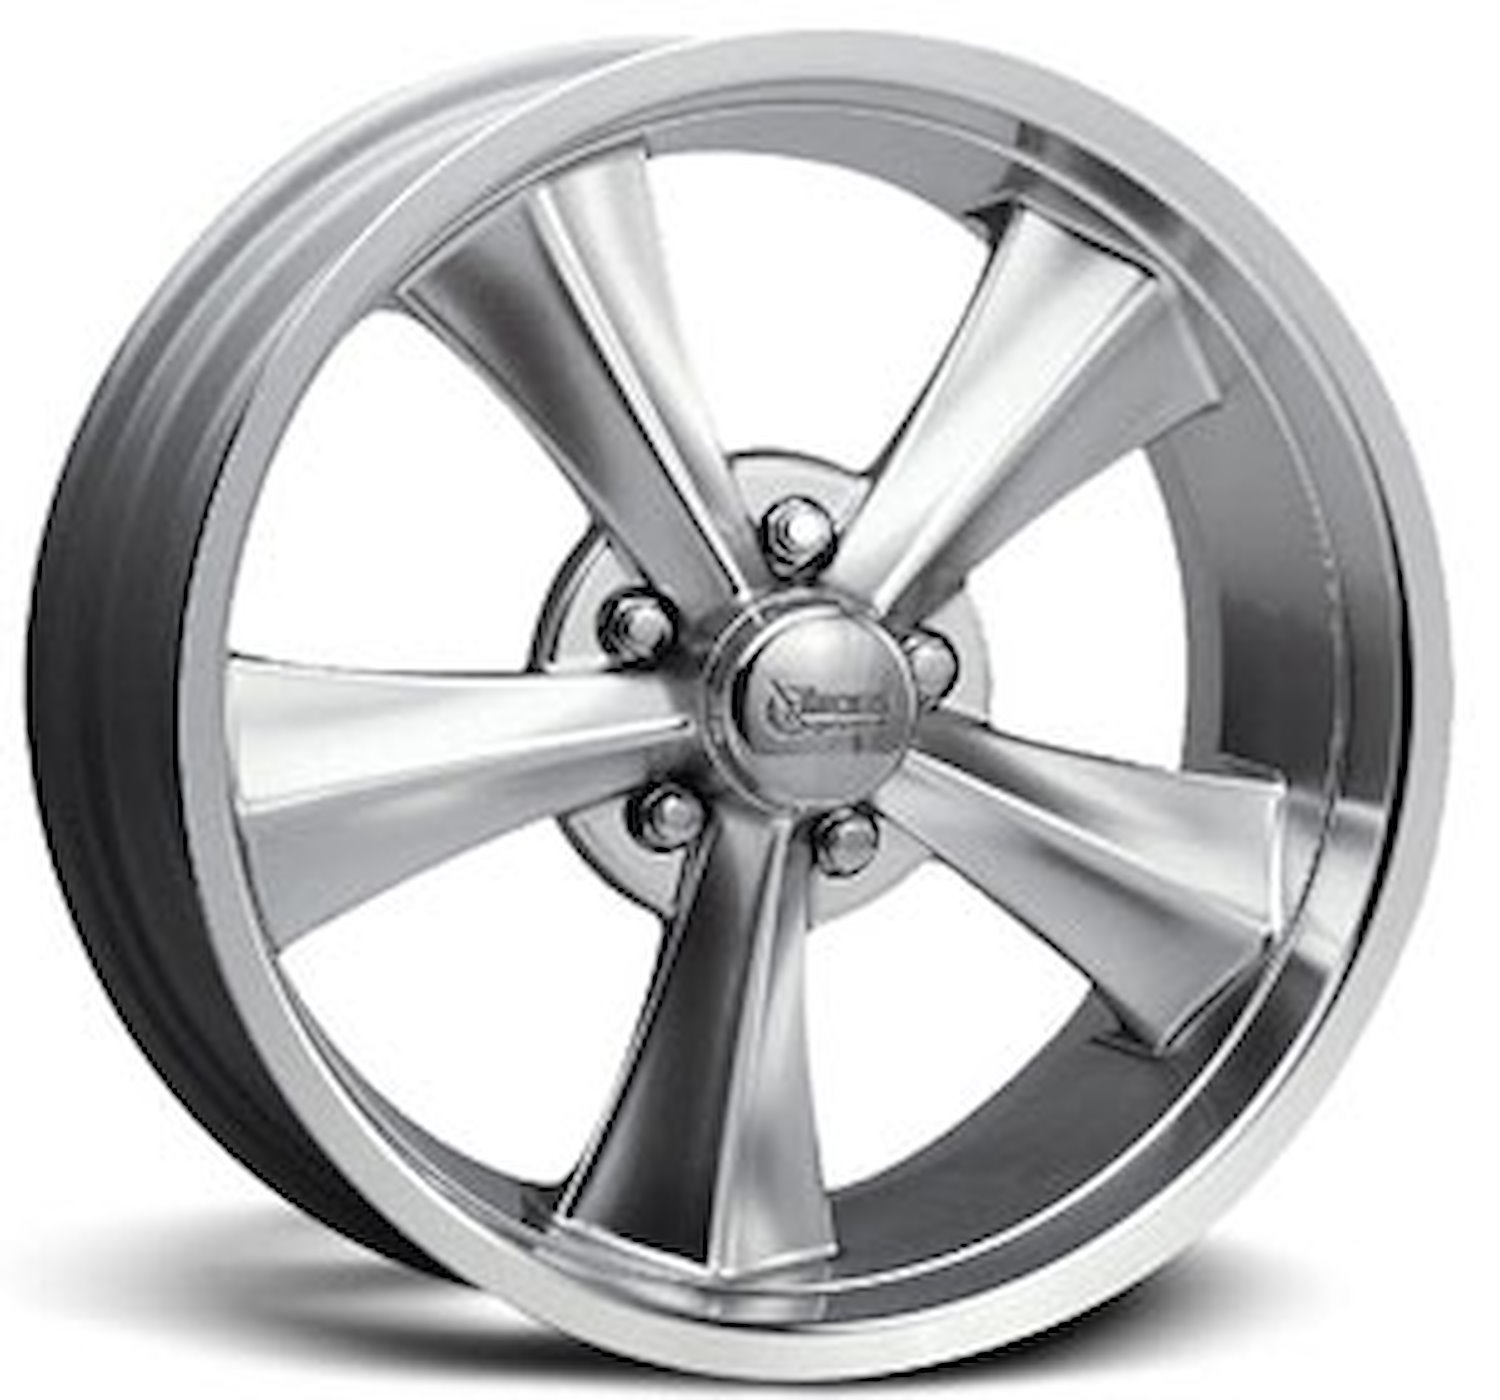 Booster Wheel - Hyper Silver Size: 18" x 9"